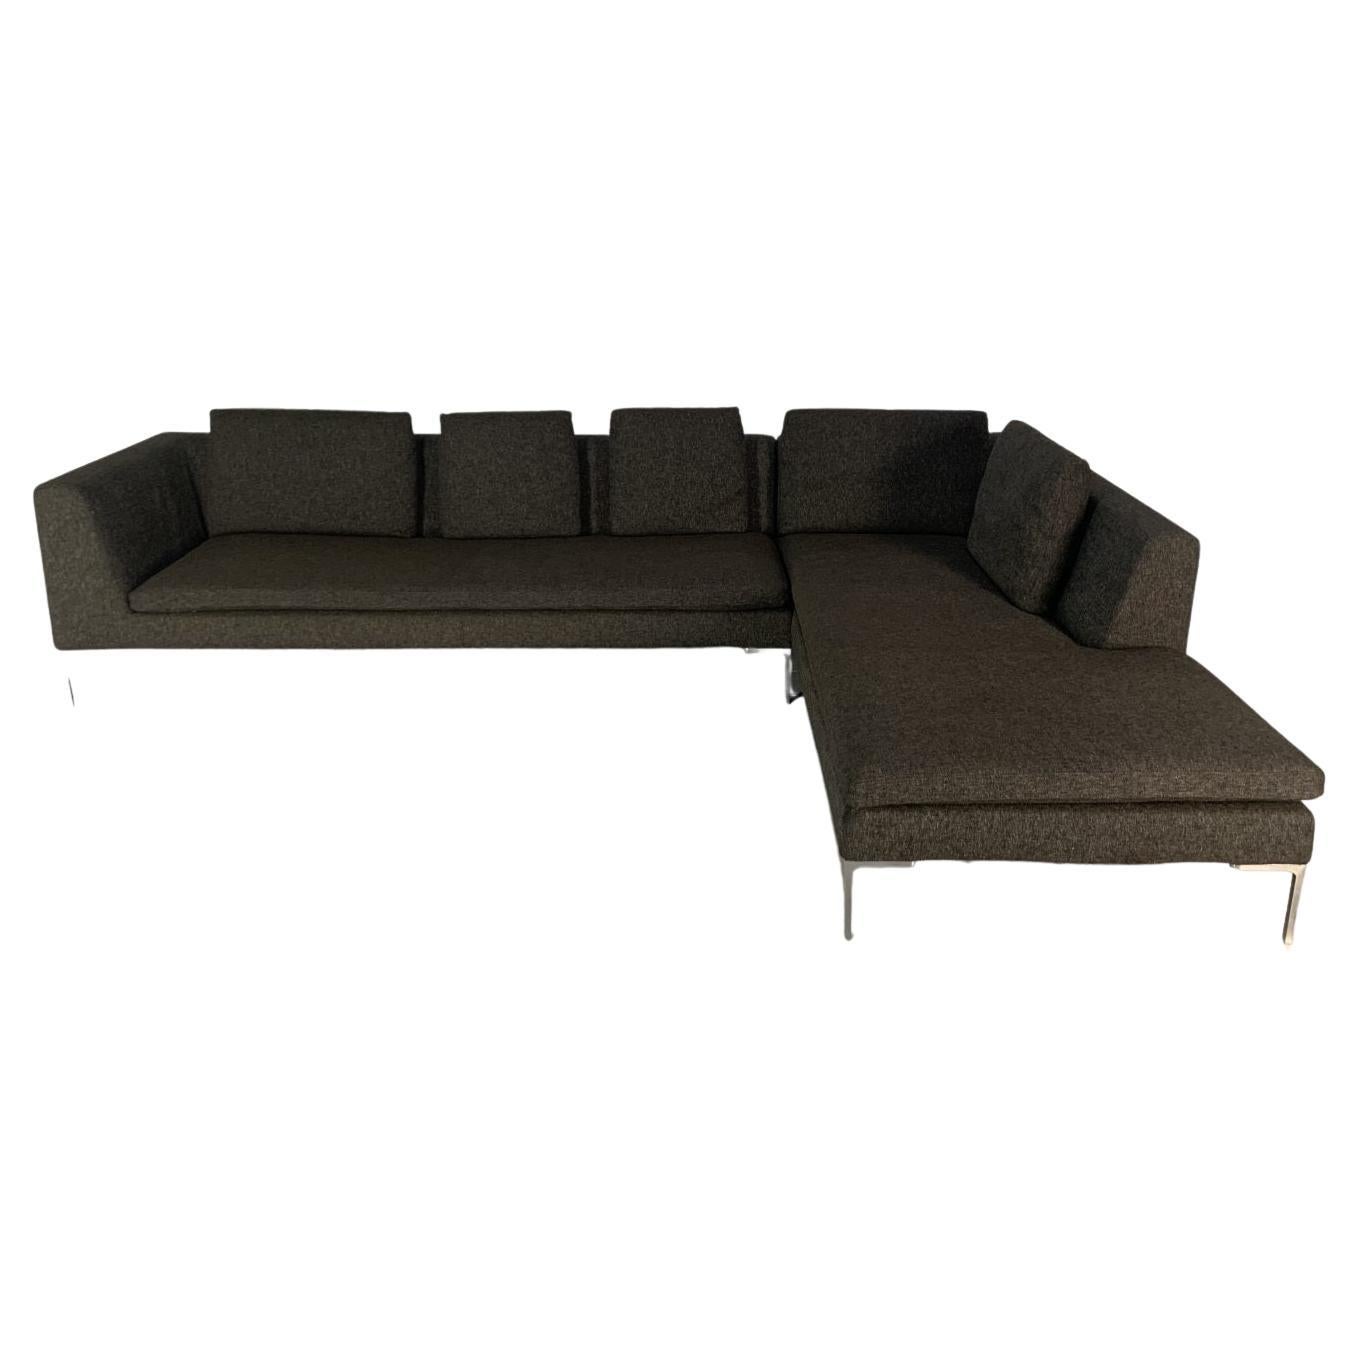 B&B Italia “Charles” L-Shape Sofa, in Dark Grey & Brown Fabric For Sale